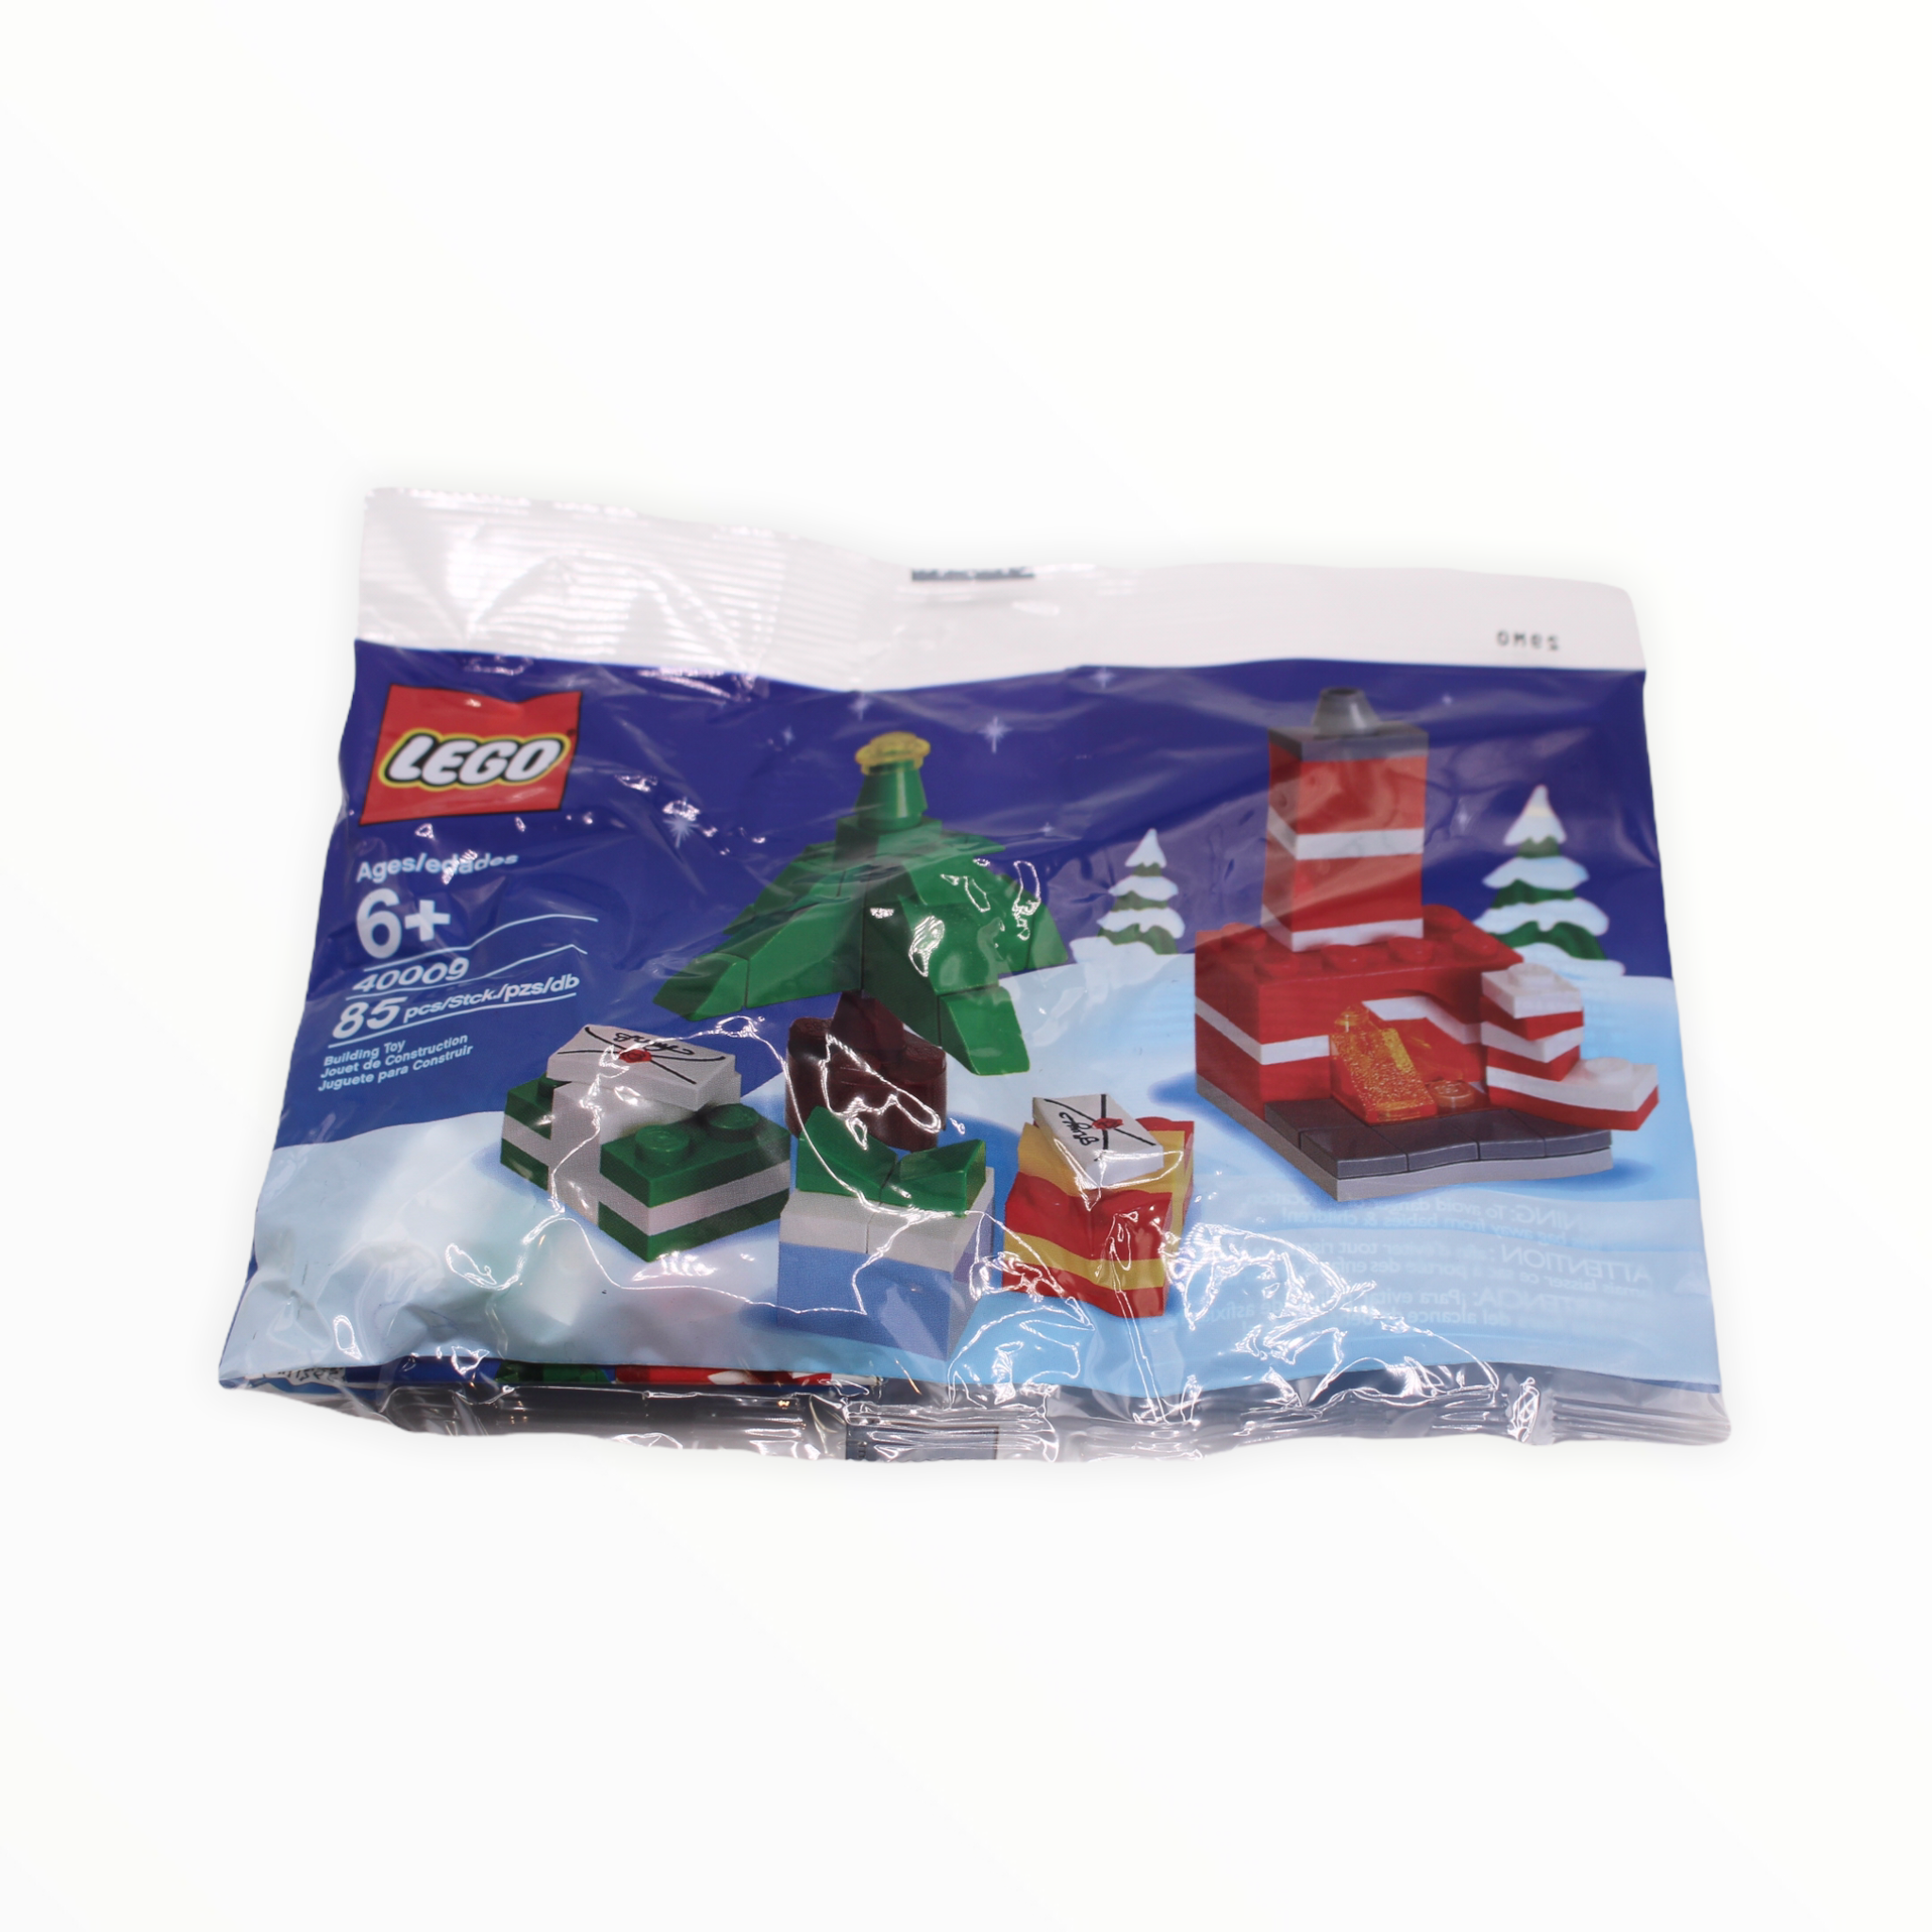 Polybag 40009 LEGO Holiday Building Set